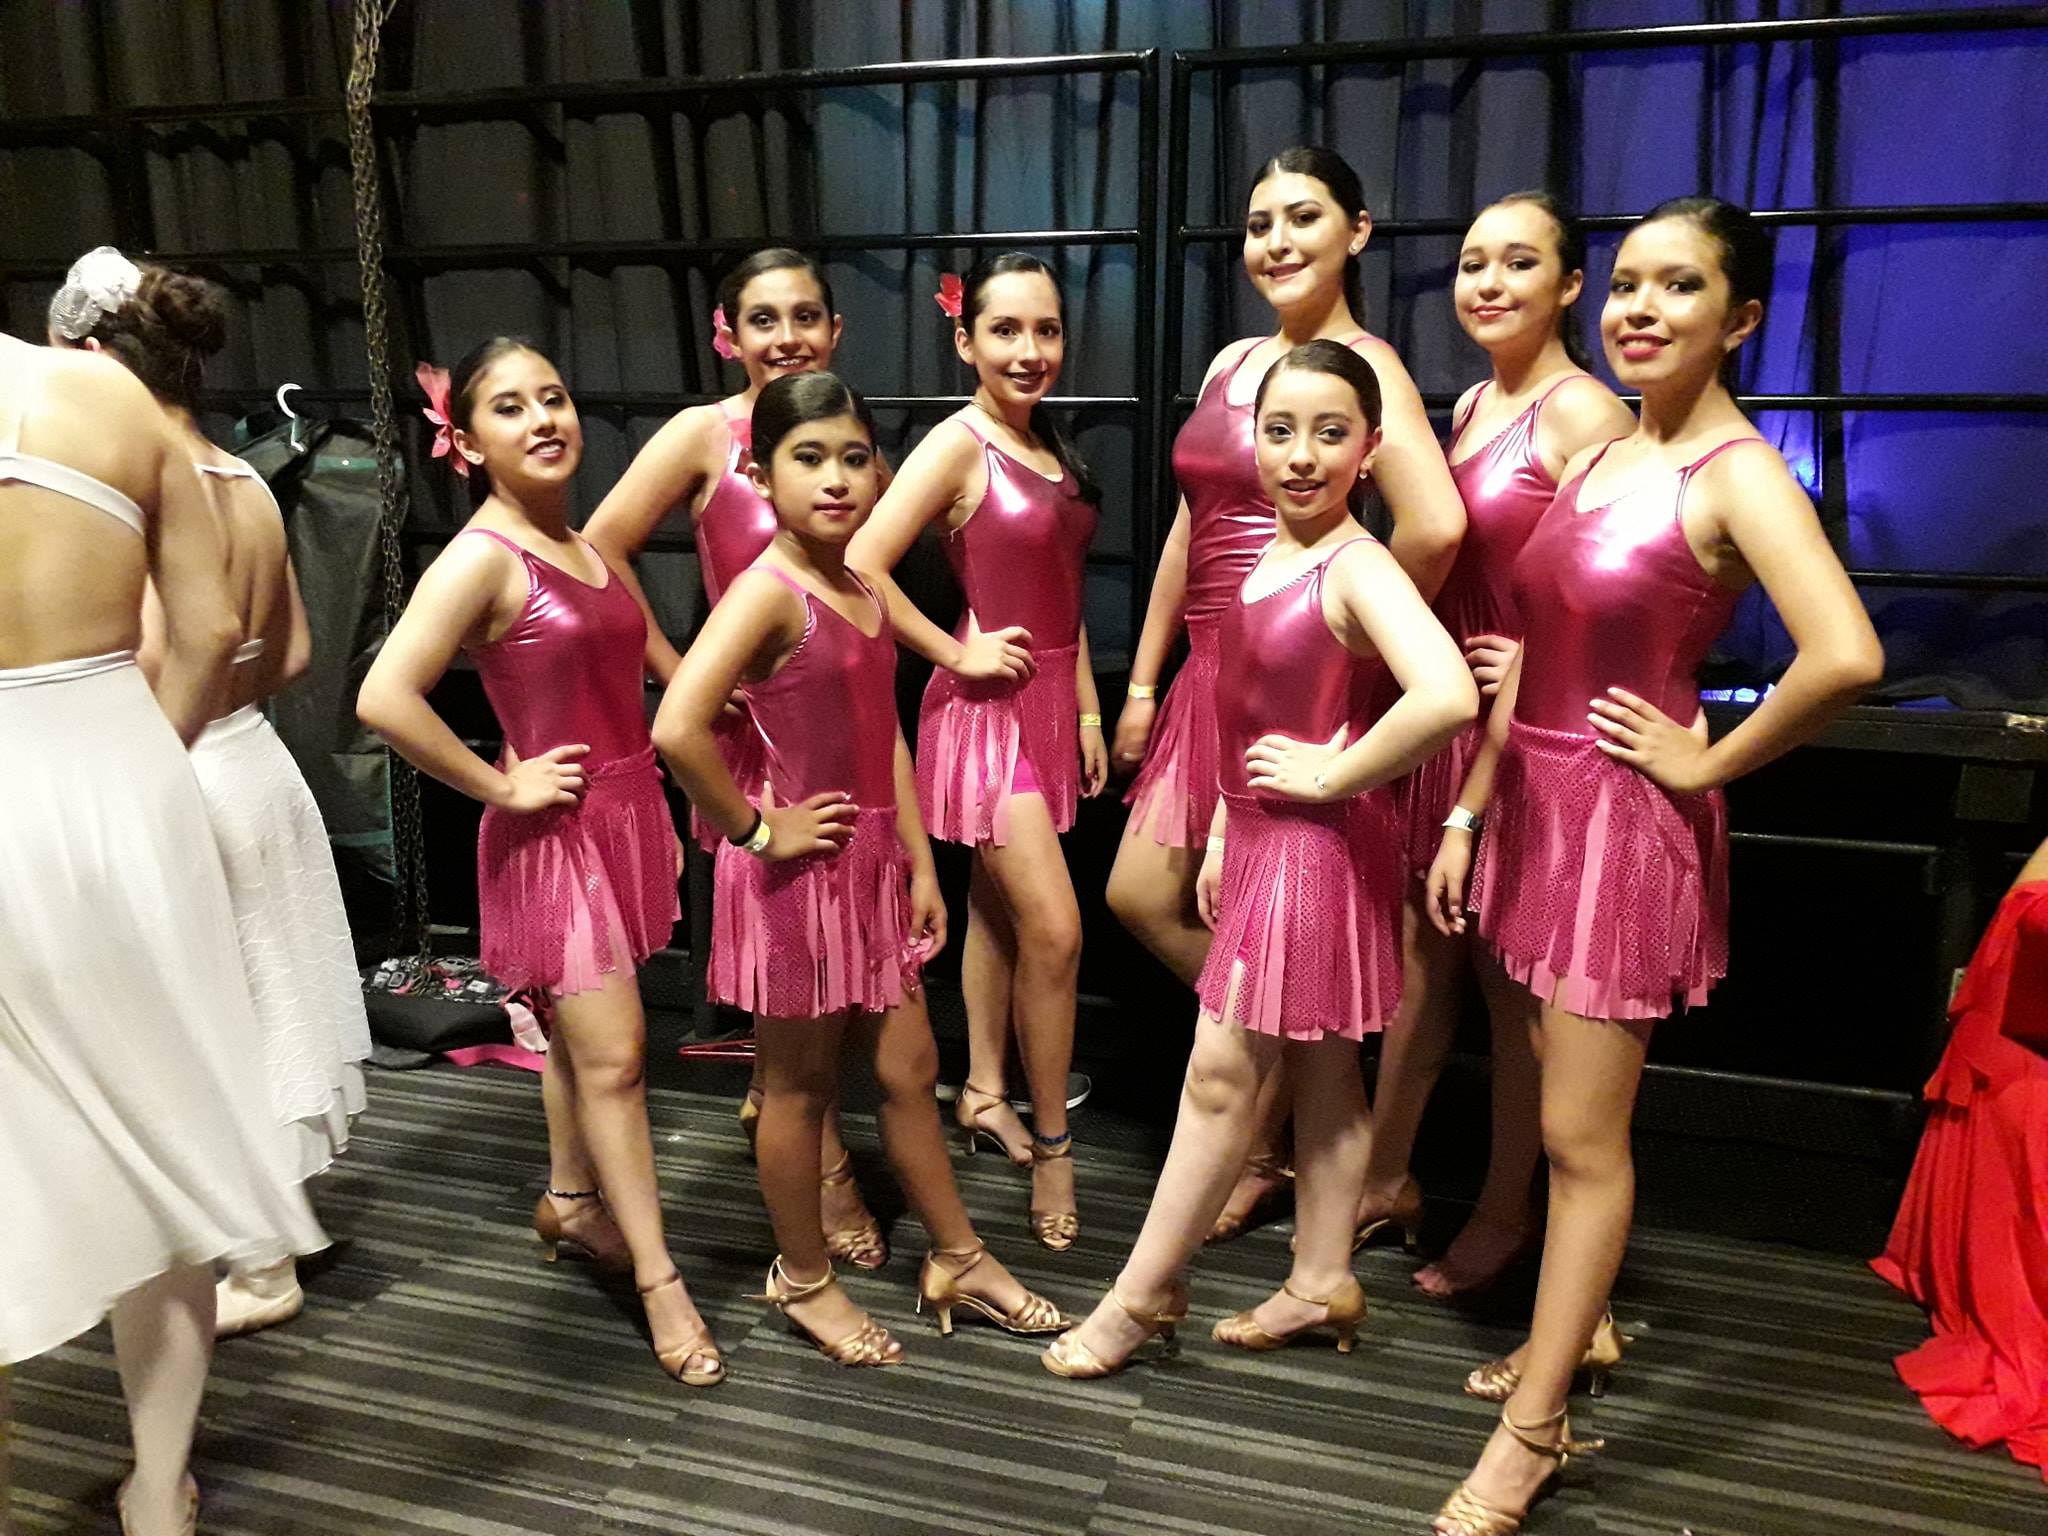 Destacadas bailarinas de Guatemala representarán a su país en el mundial de baile de Florida